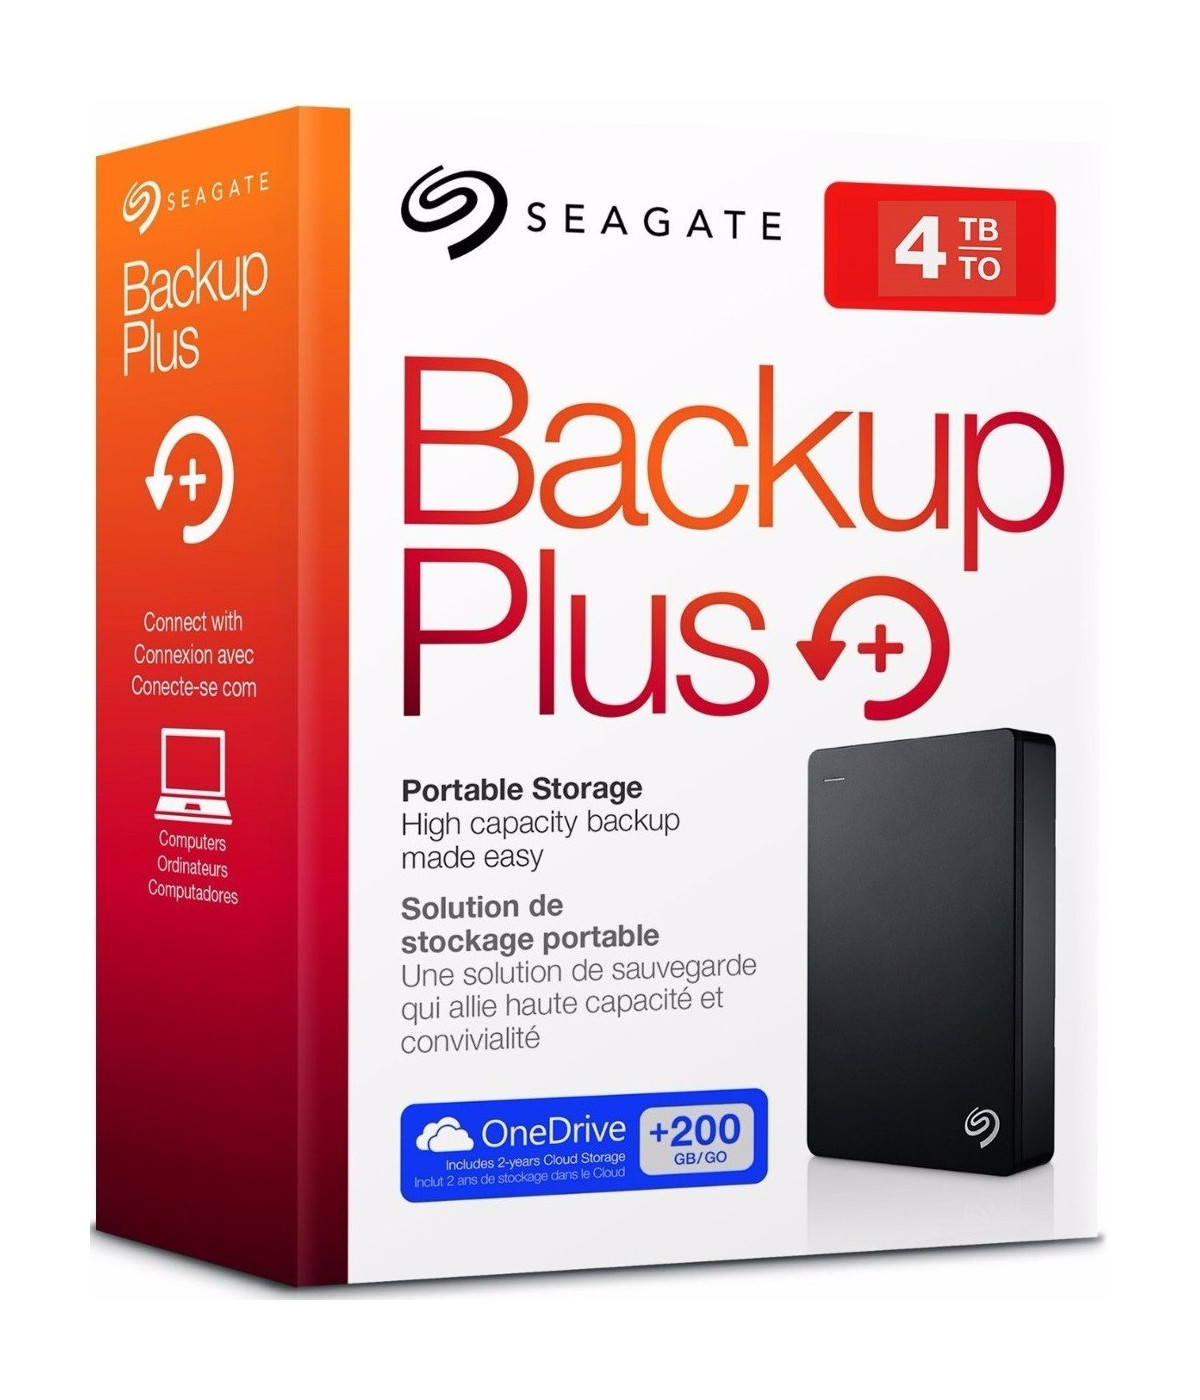 Seagate presenta nuevos discos duros externos Backup Plus Slim & Fast